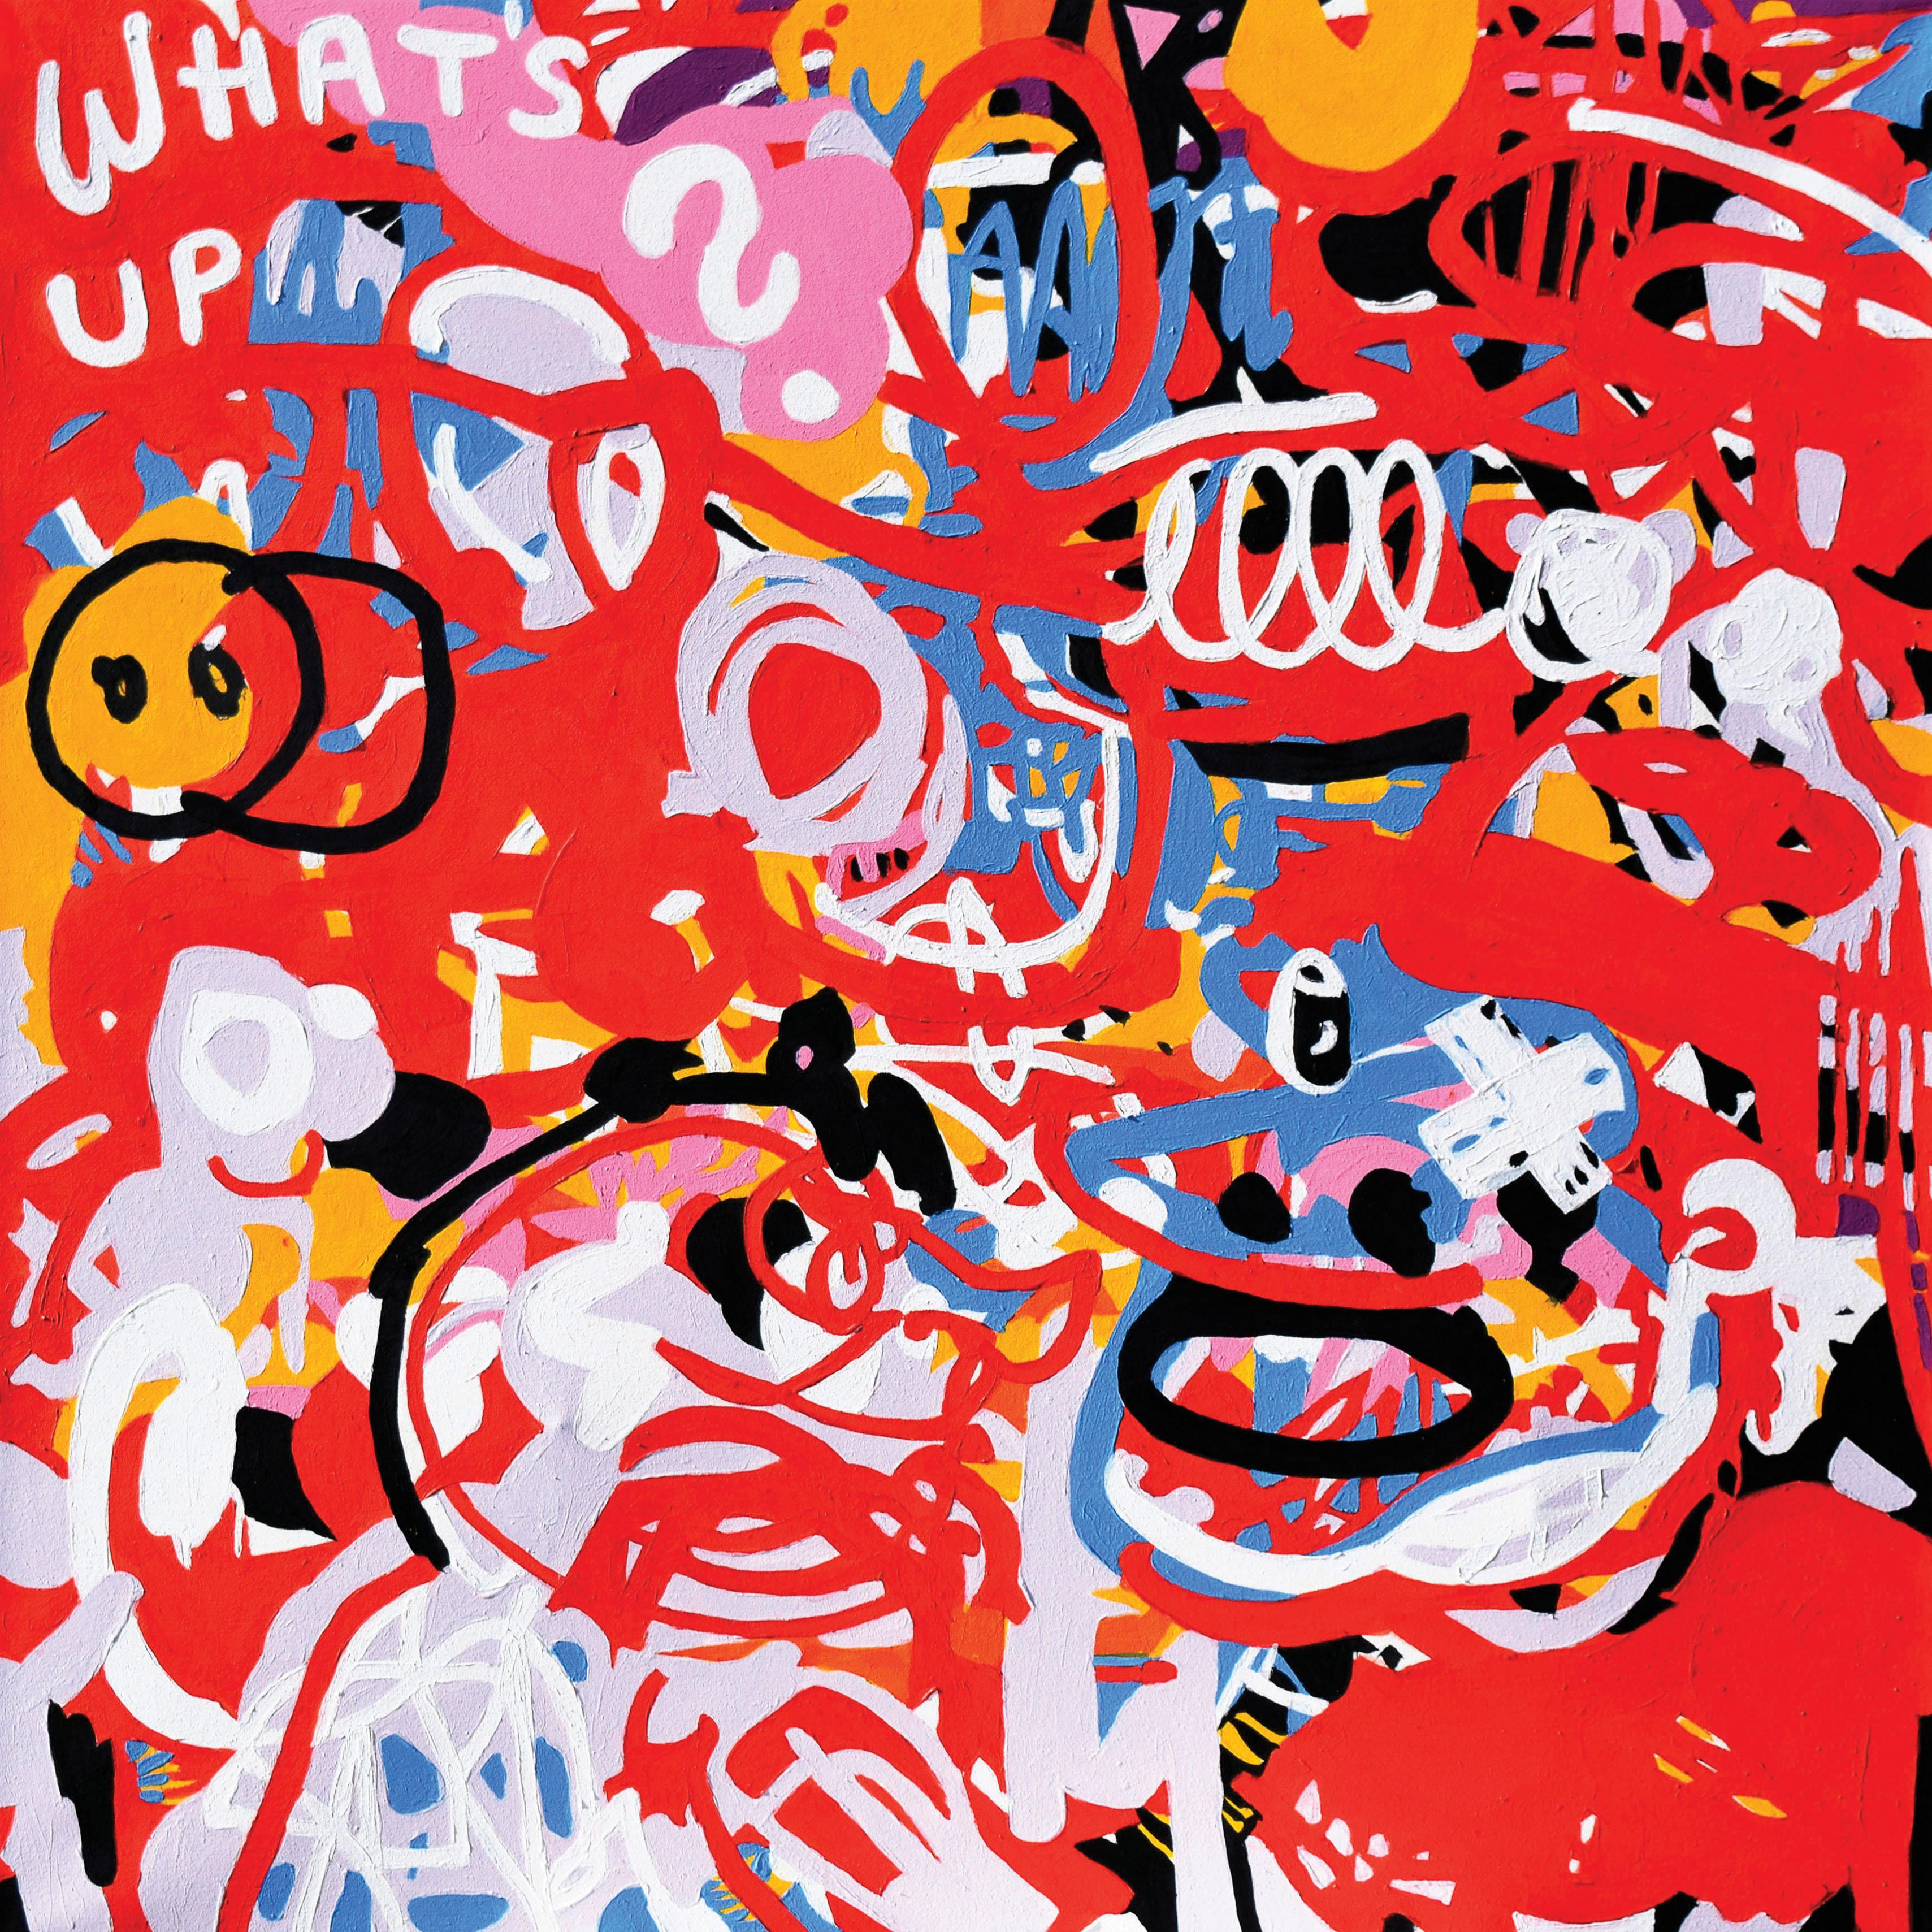 Whats Up II  - Abstraction, Expression, Pop, Street Art, Energetic, Joyful